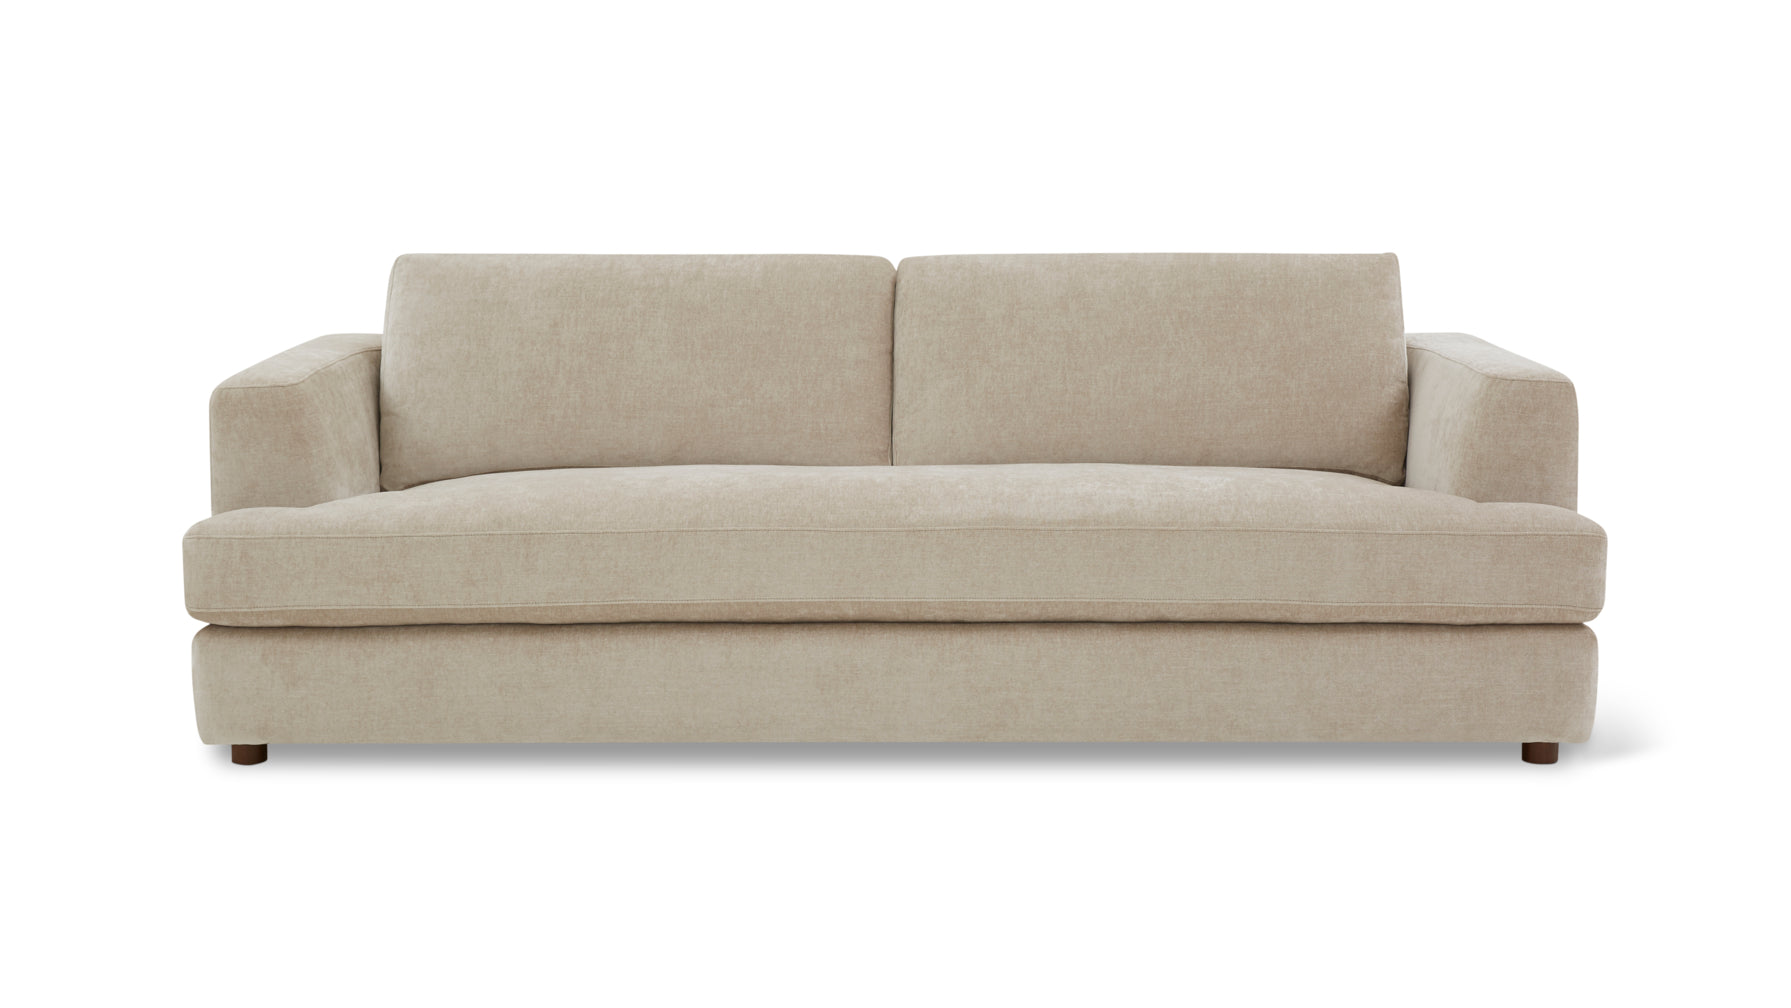 Good Company Sofa, 3 Seater, Cashew - Image 1